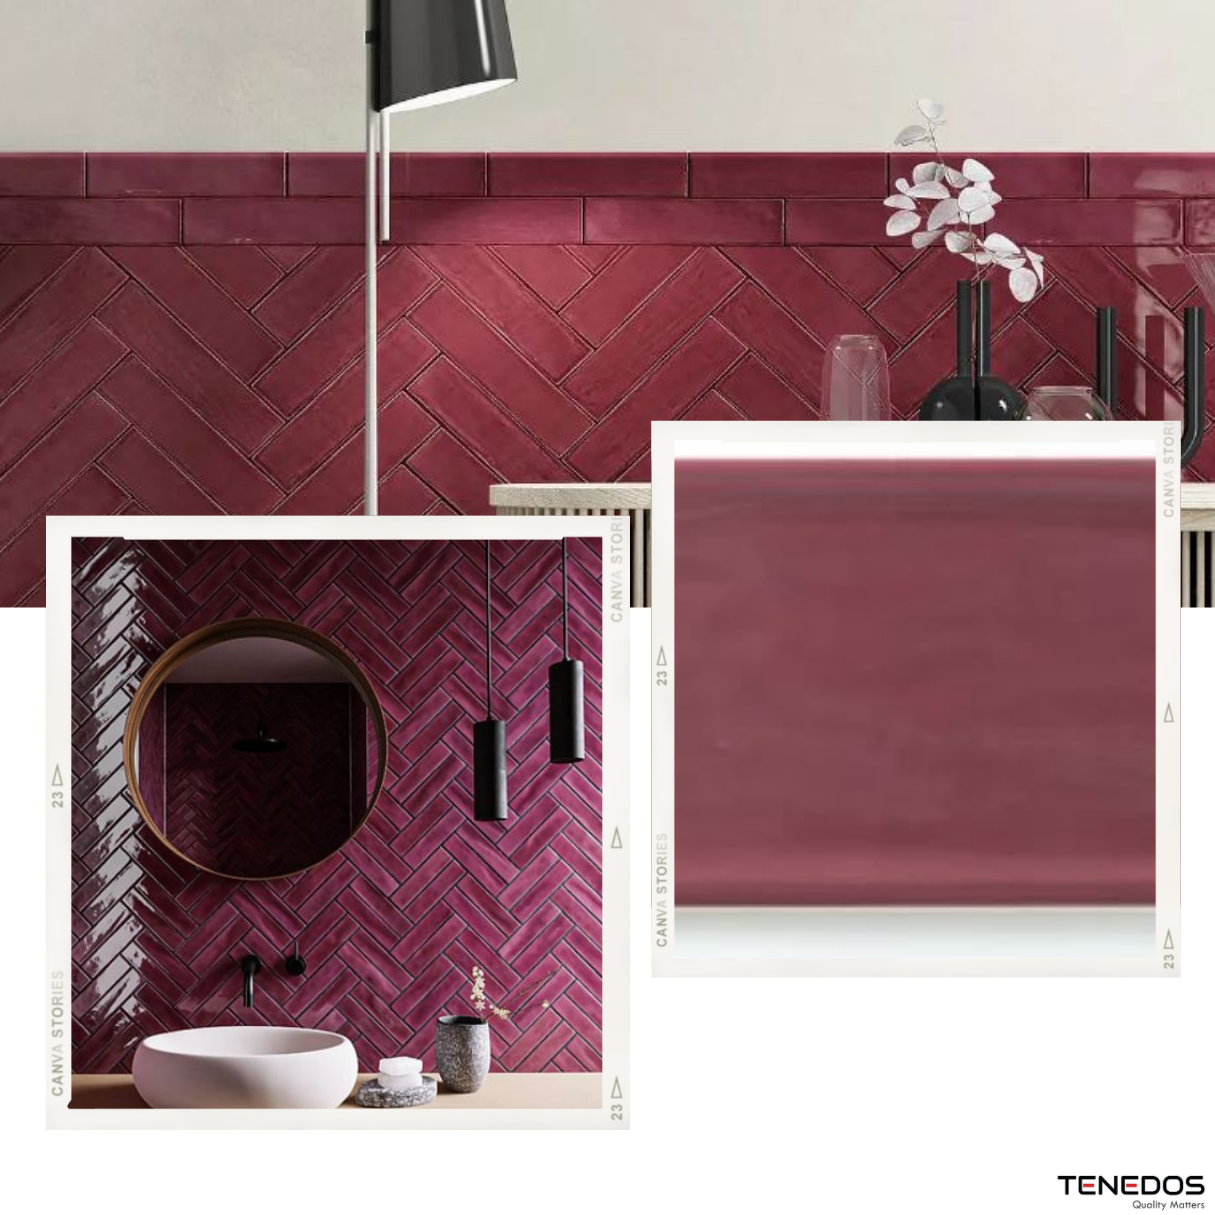 Tenedos Burgundy Purple Handmade Ceramic Subway 3x12 Wall Tile Backsplash Gloss Finish 3 Inch X 12 Inch for Kitchen, Bathroom Shower, Accent Decor, Fireplace